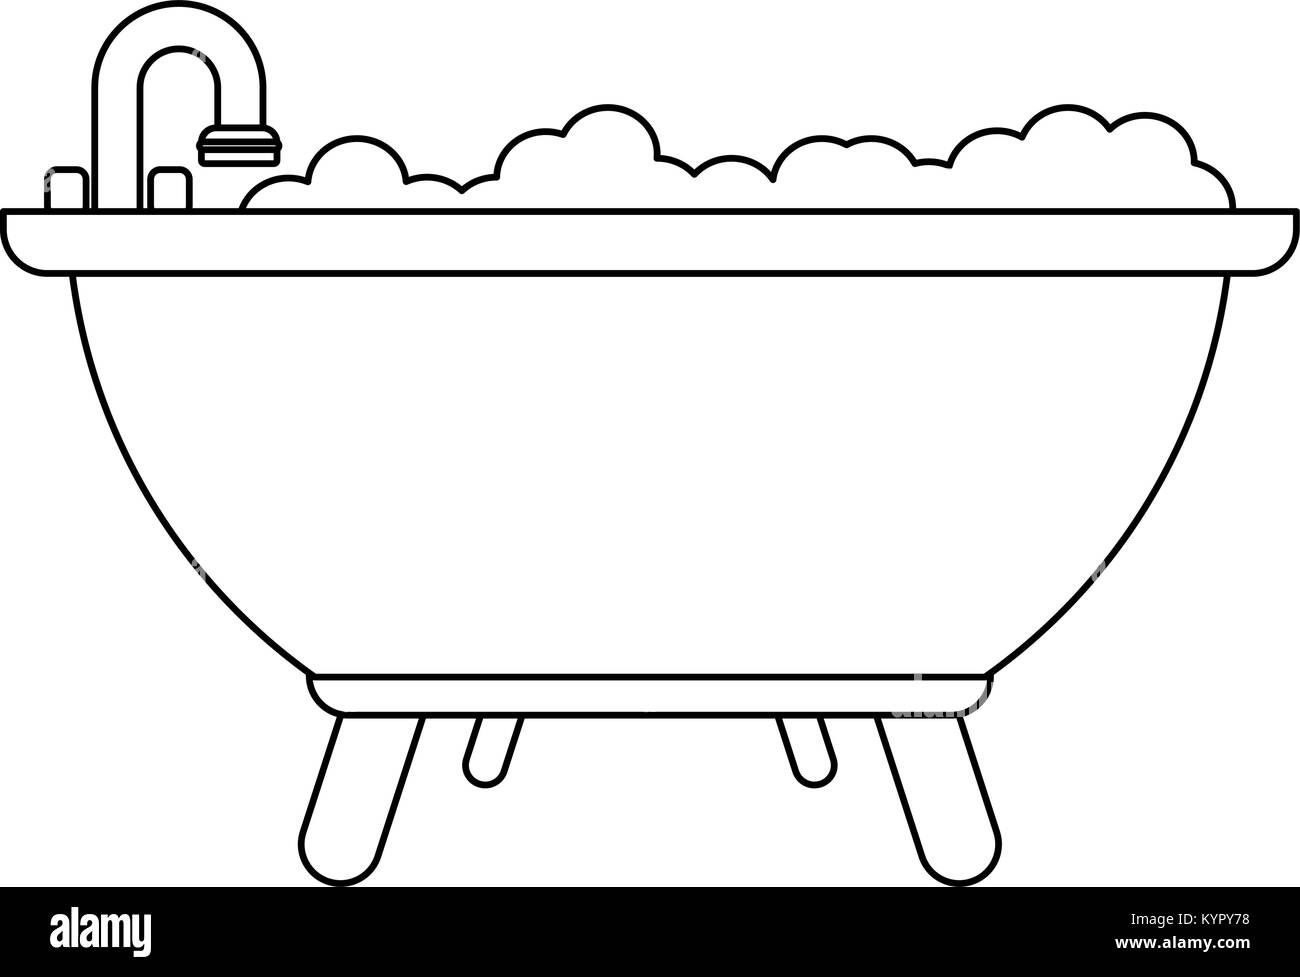 Bathtub isolated symbol Stock Vector